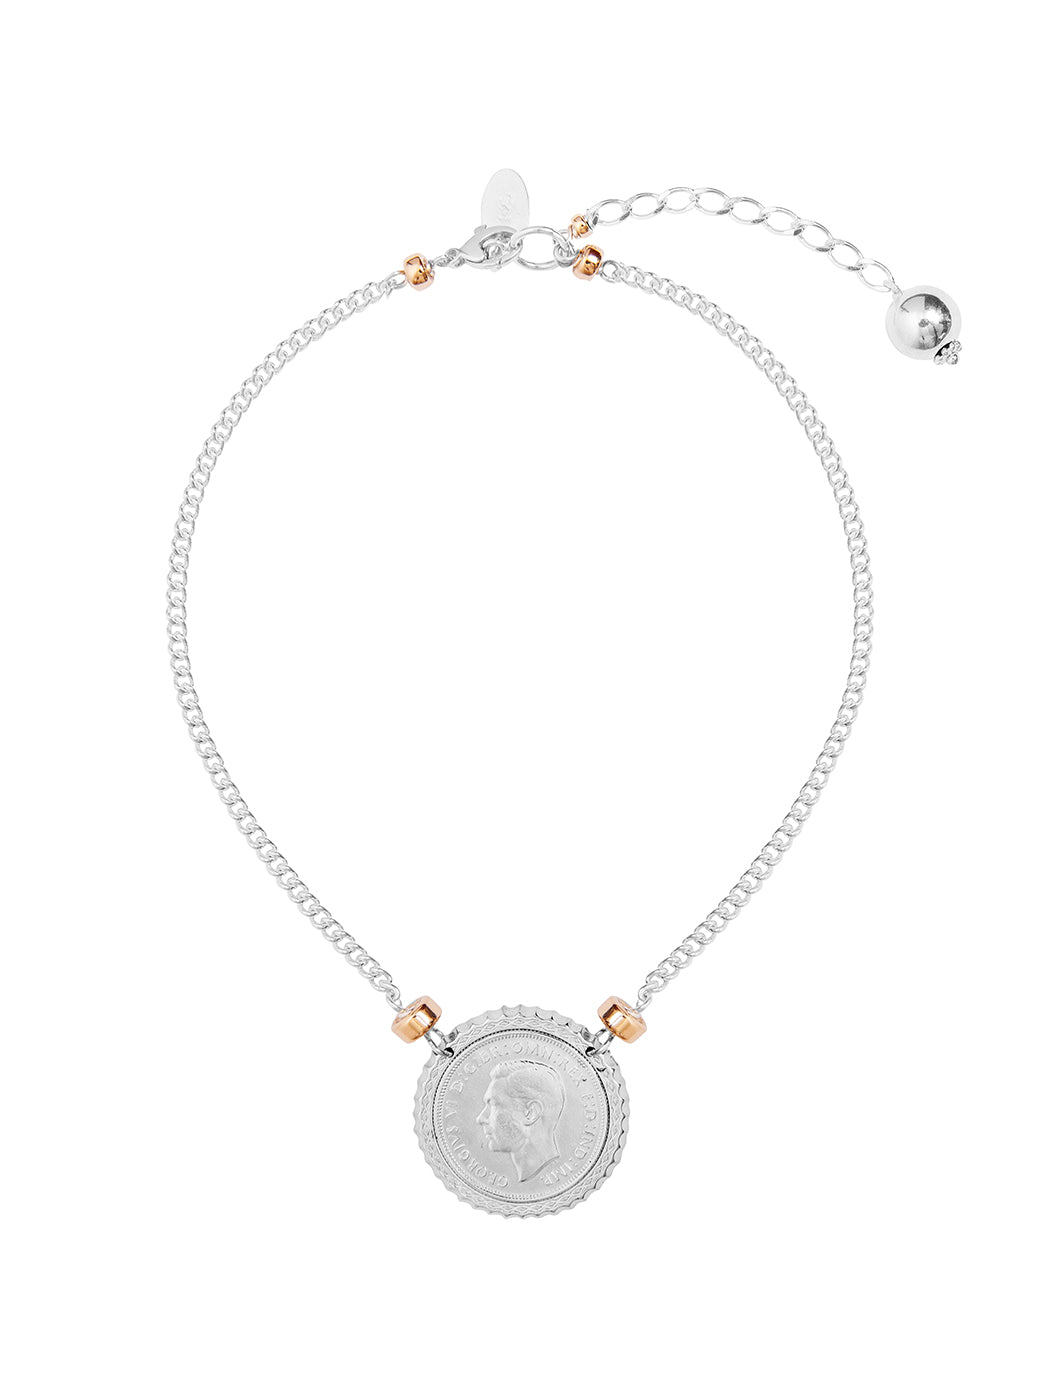 Fiorina Jewellery Falcon Choker Necklace